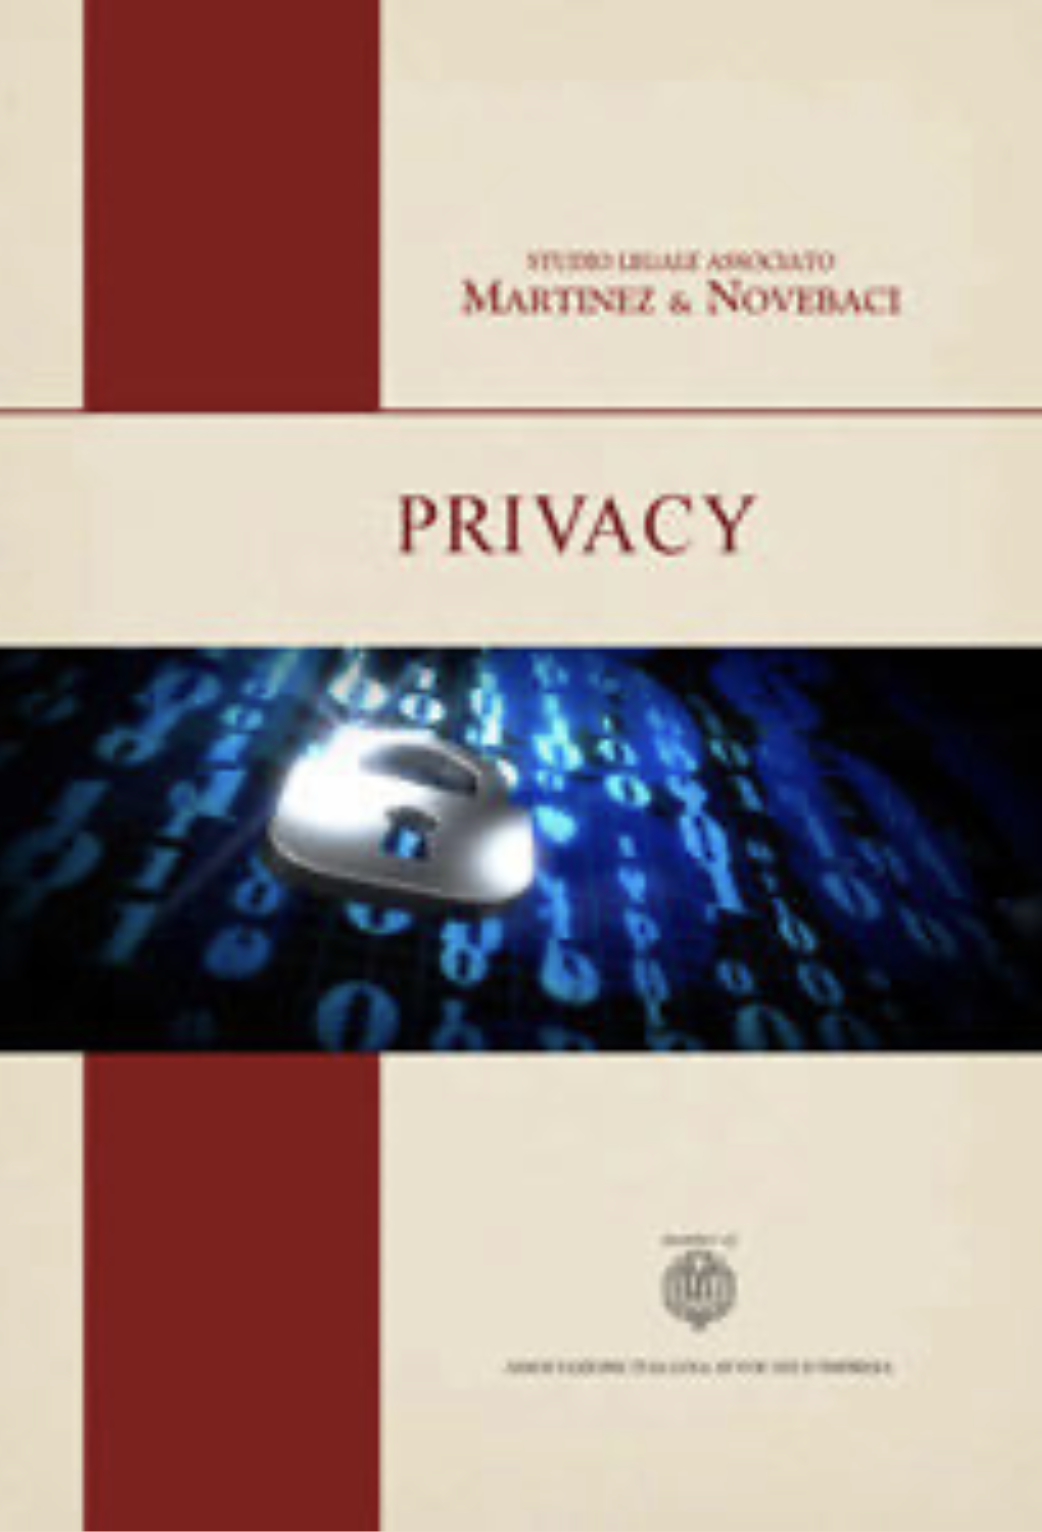 https://www.martinez-novebaci.it/wp-content/uploads/2021/07/privacy.png